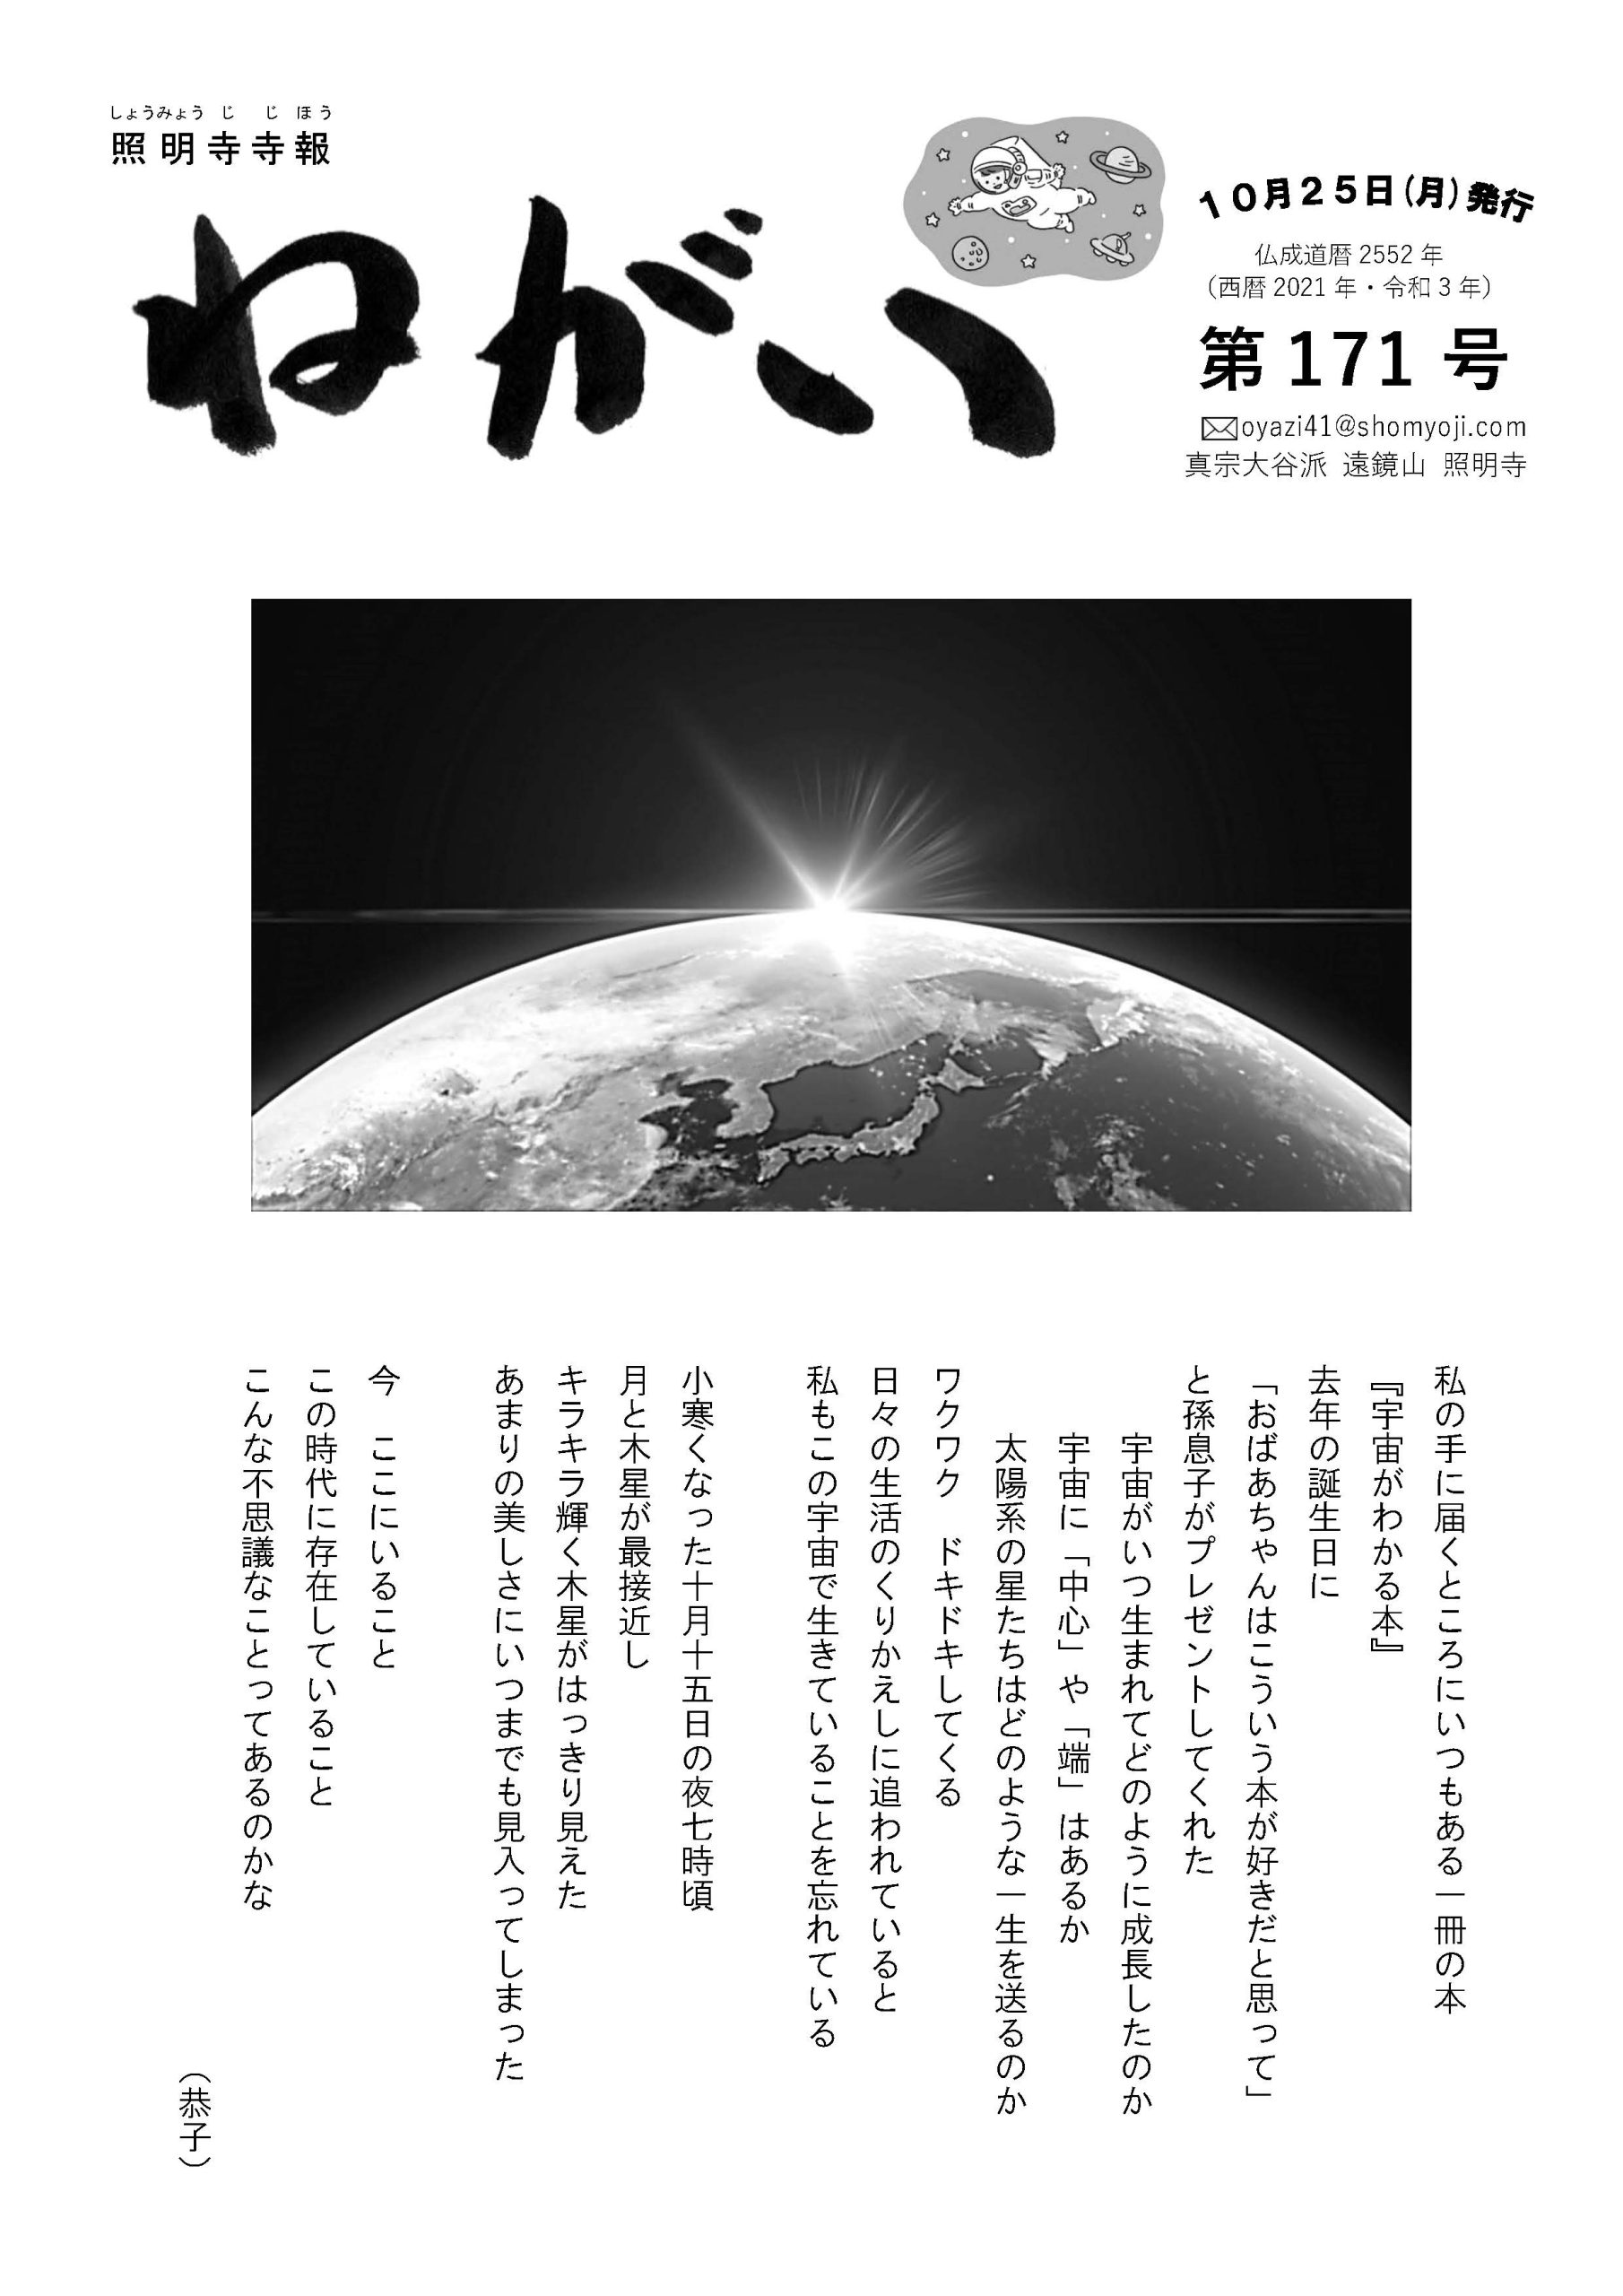 寺報「願い」 第171号 2021年10月25日発行